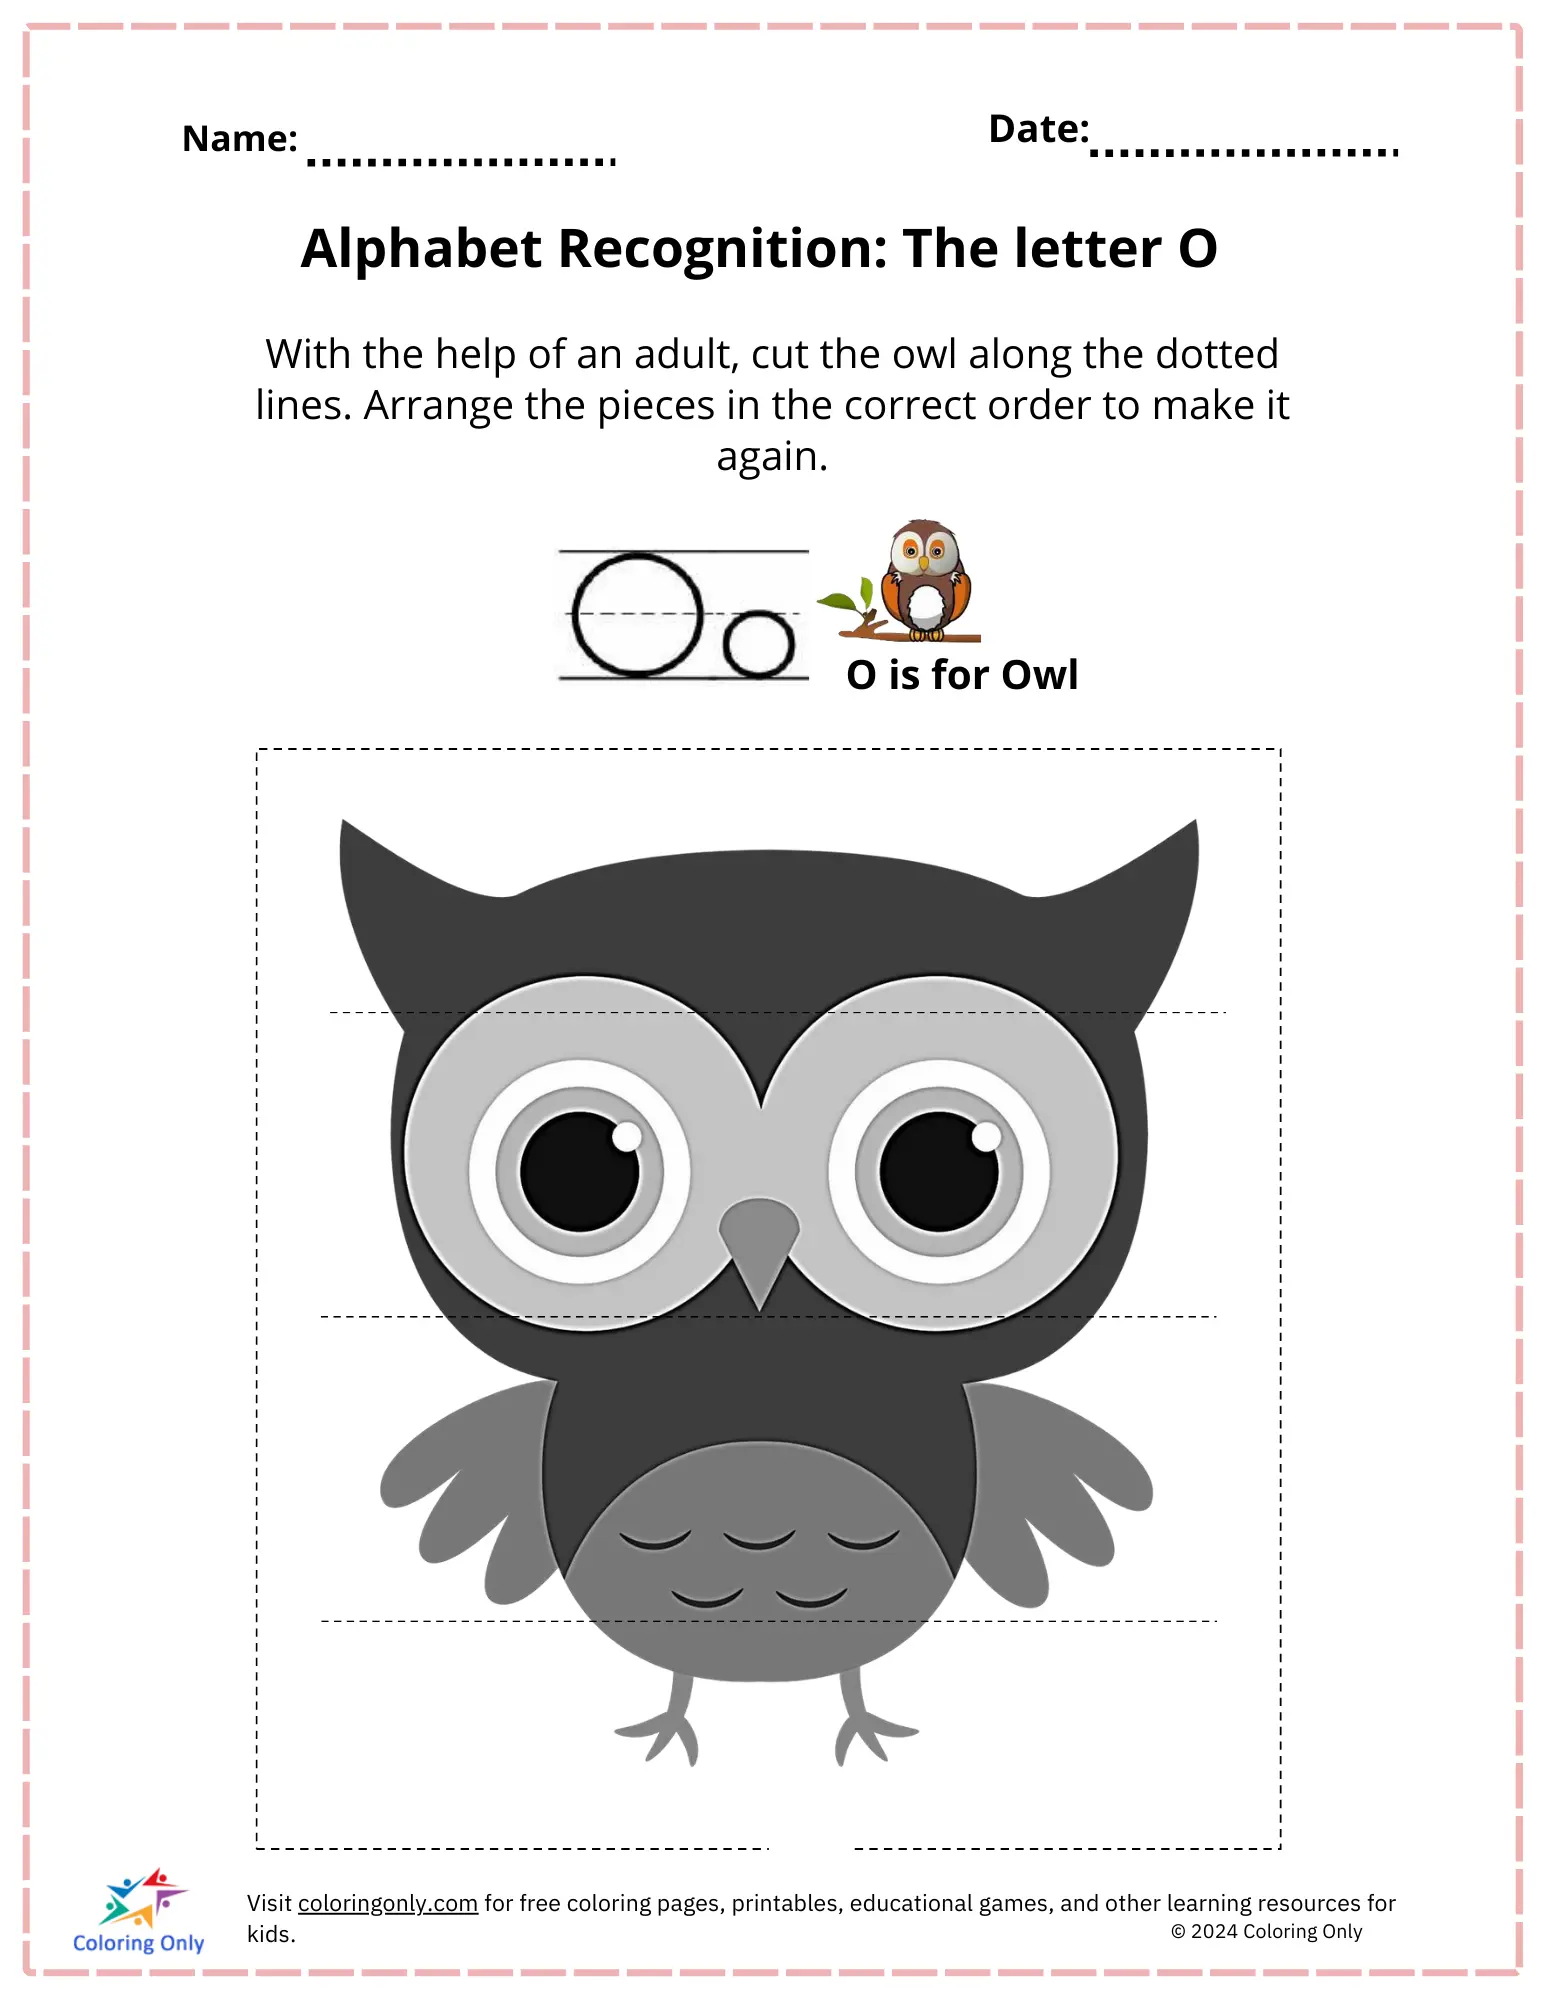 Alphabet Recognition: The Letter O Free Printable Worksheet